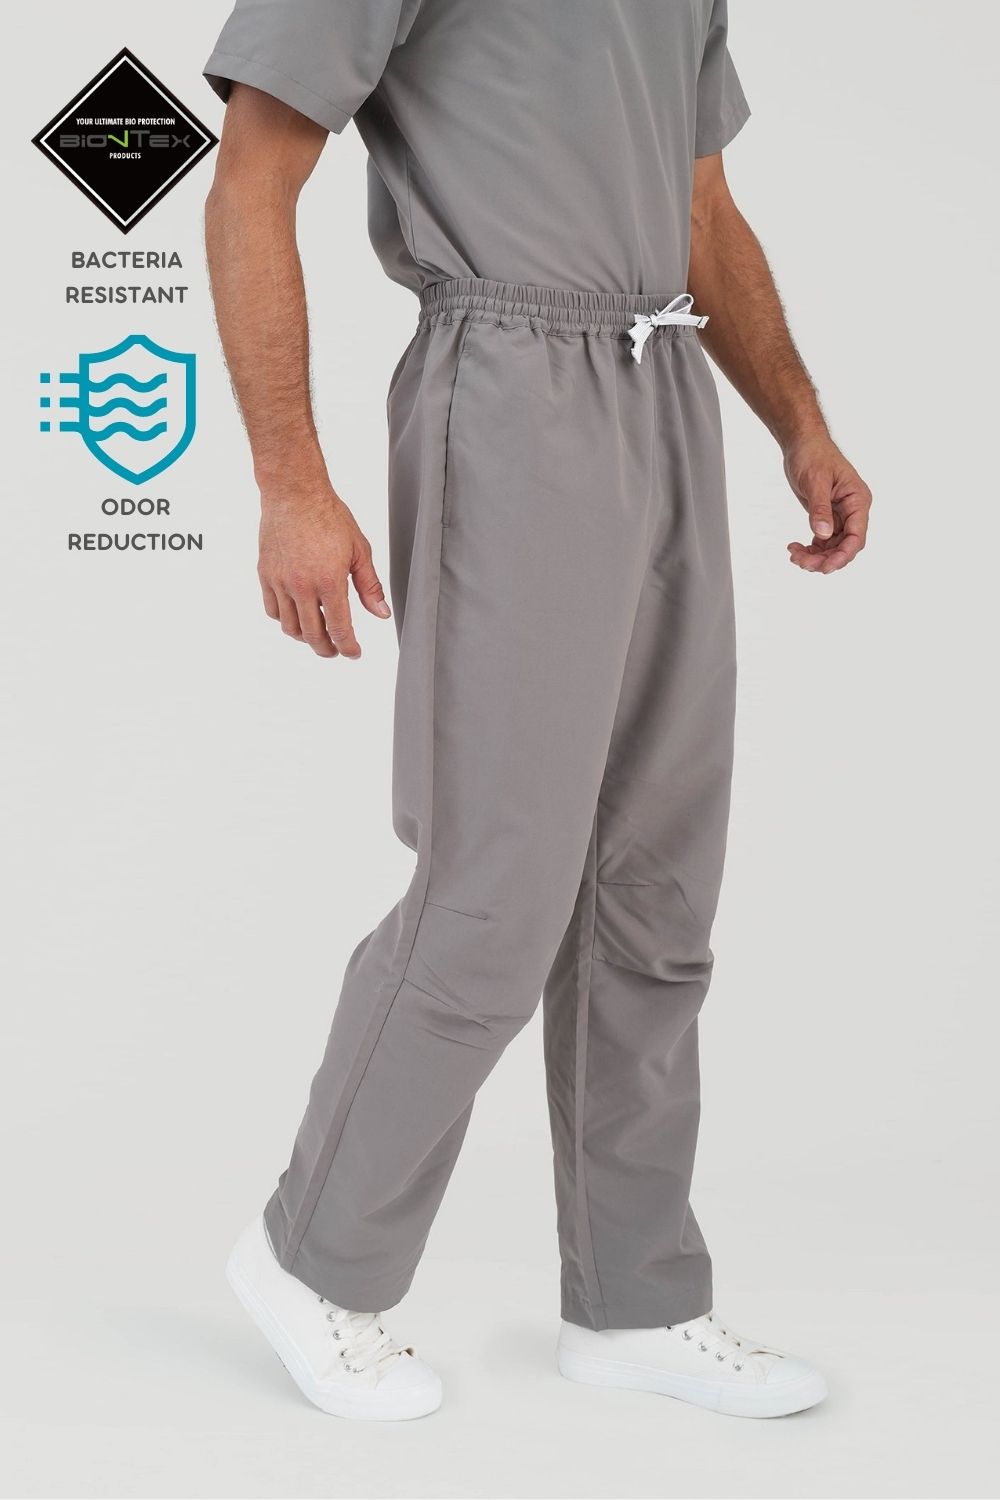 Men's BioNTex™ Scrub Pants with Contrast String